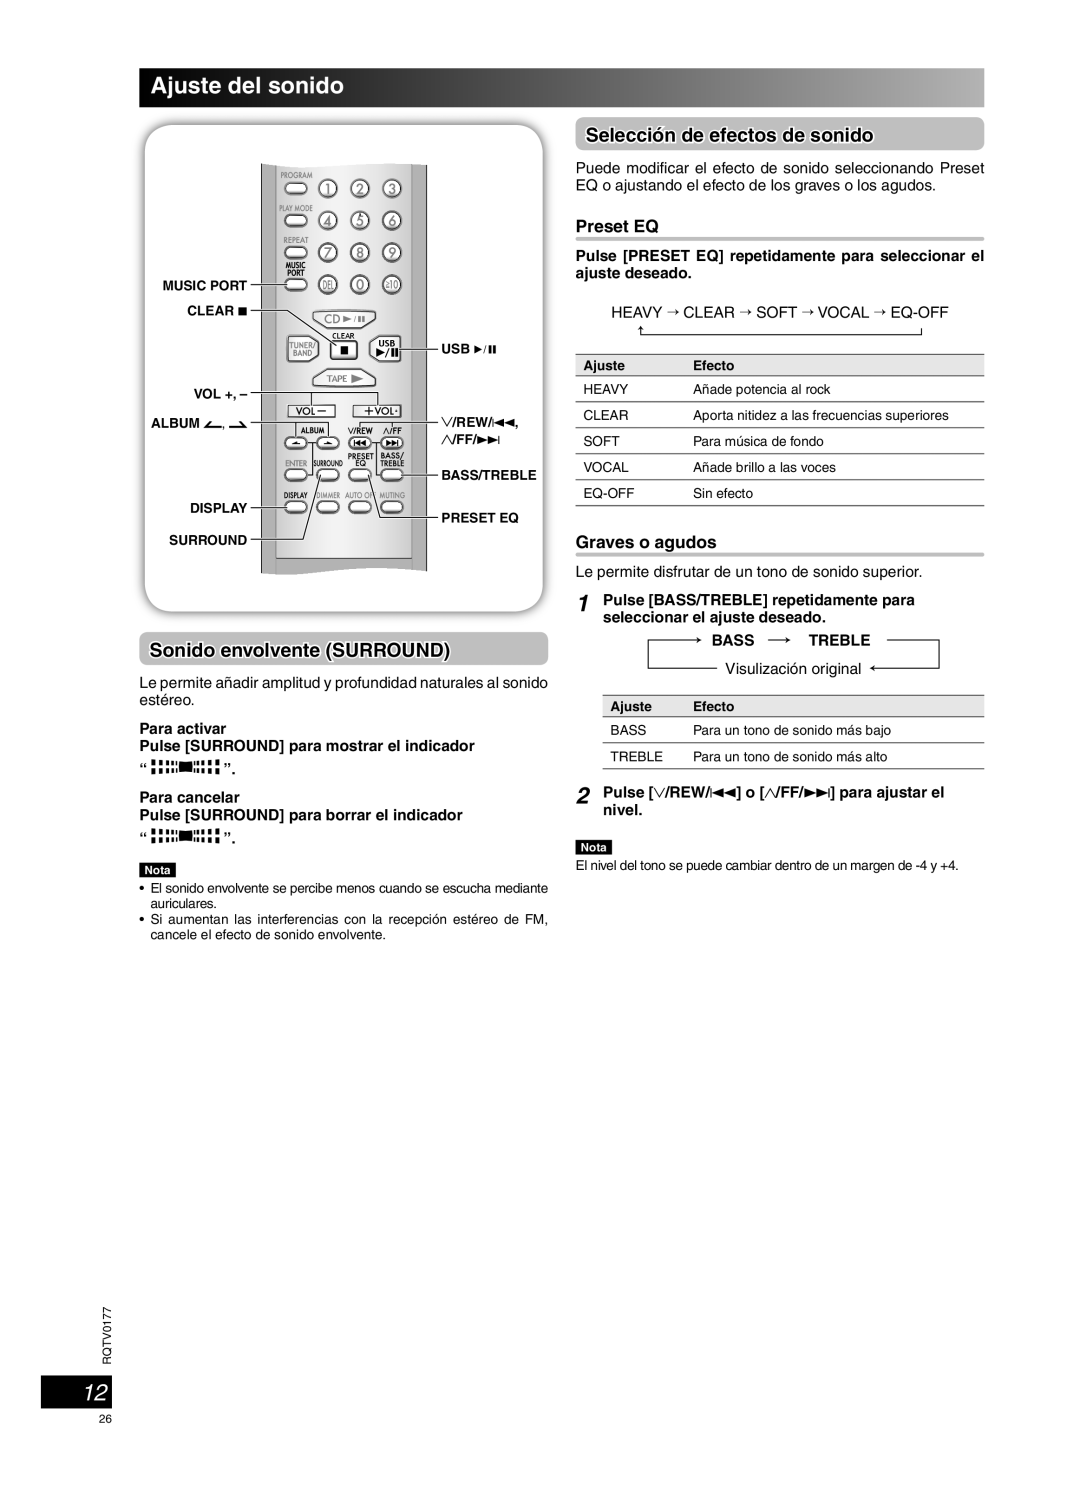 Panasonic SC-PM45 manual Ajuste del sonido, Sonido envolvente SURROUND, Selección de efectos de sonido, Graves o agudos 